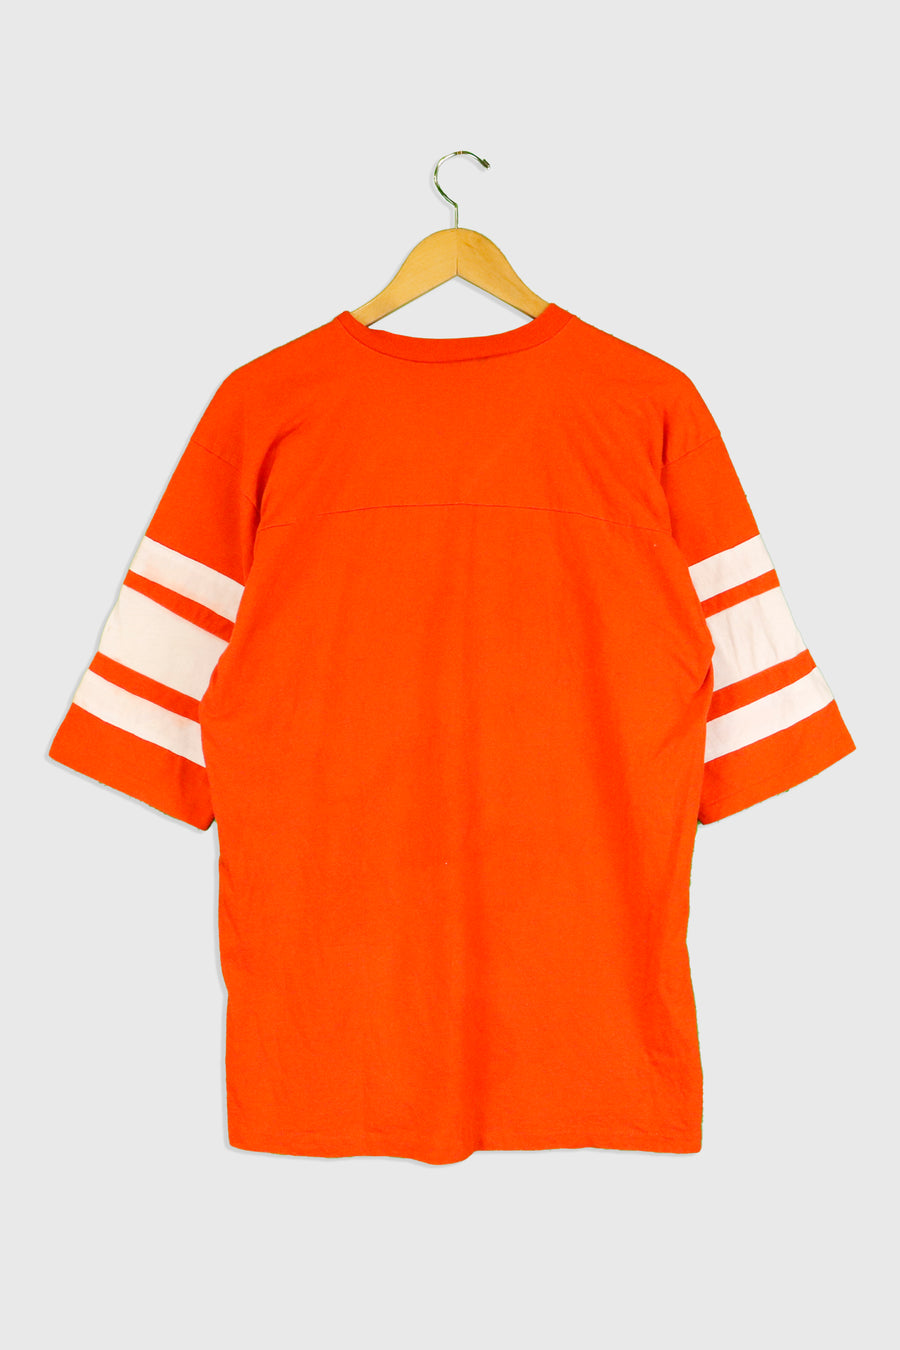 Vintage Oregan State Beavers Stripe Sleeve T Shirt Sz L